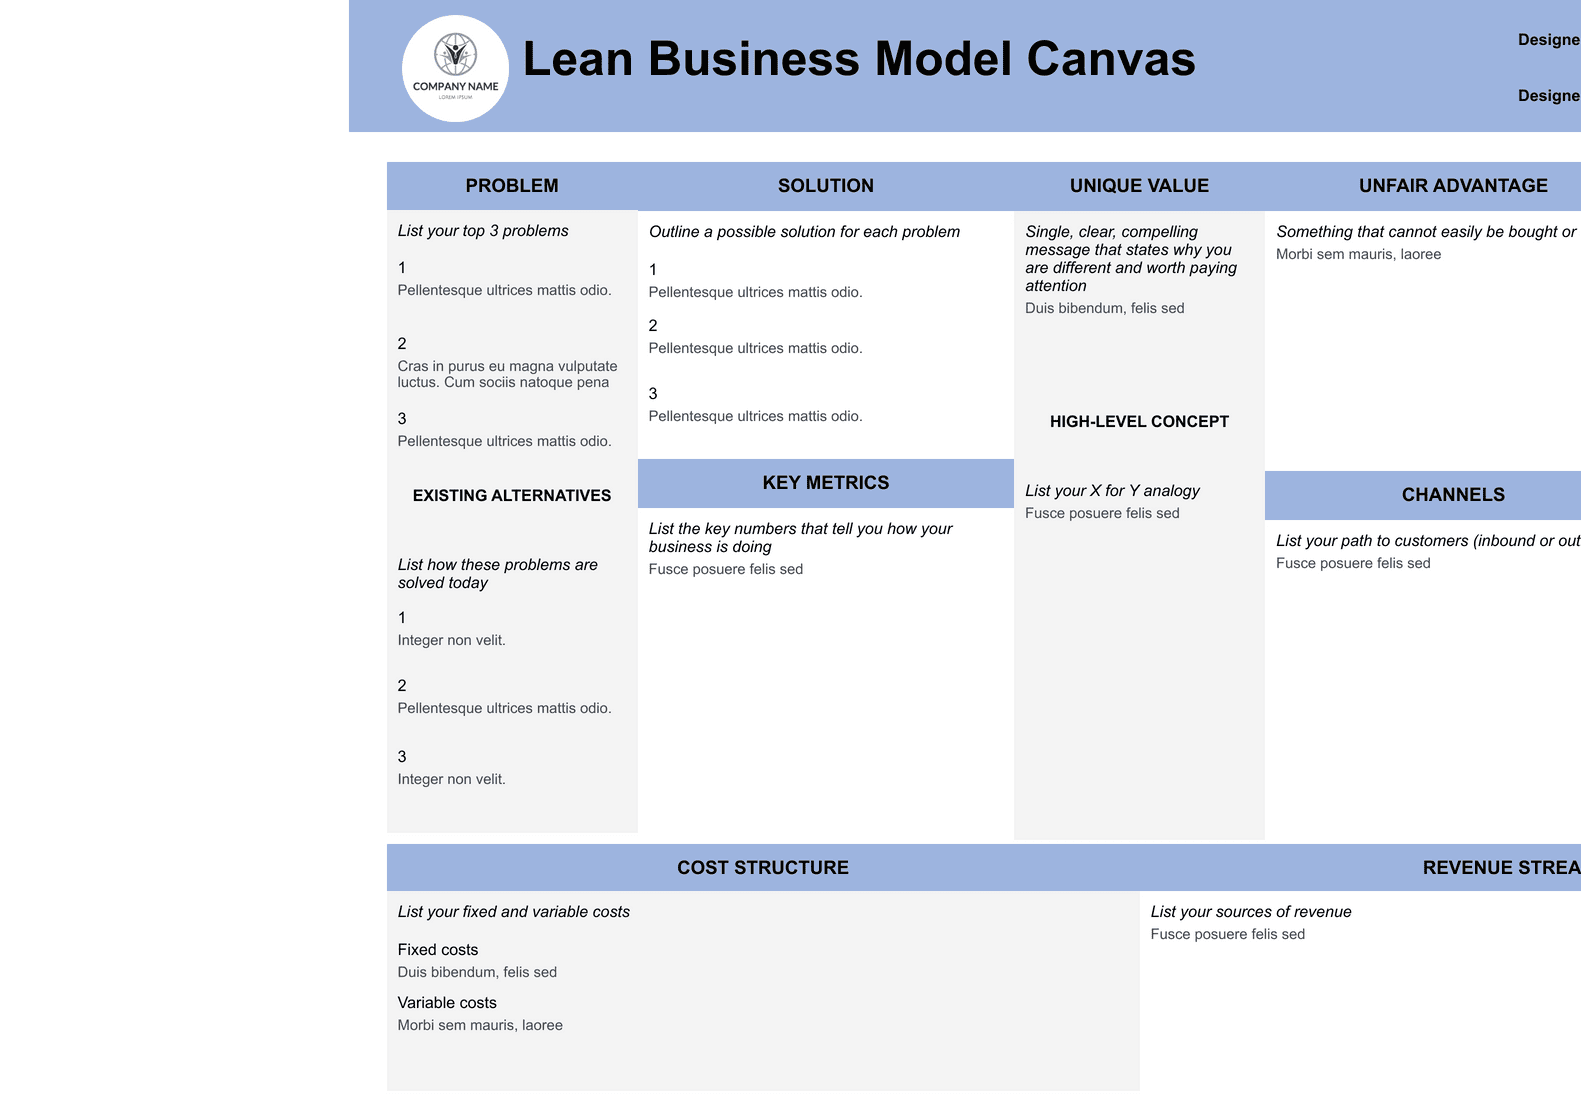 lean business plan format